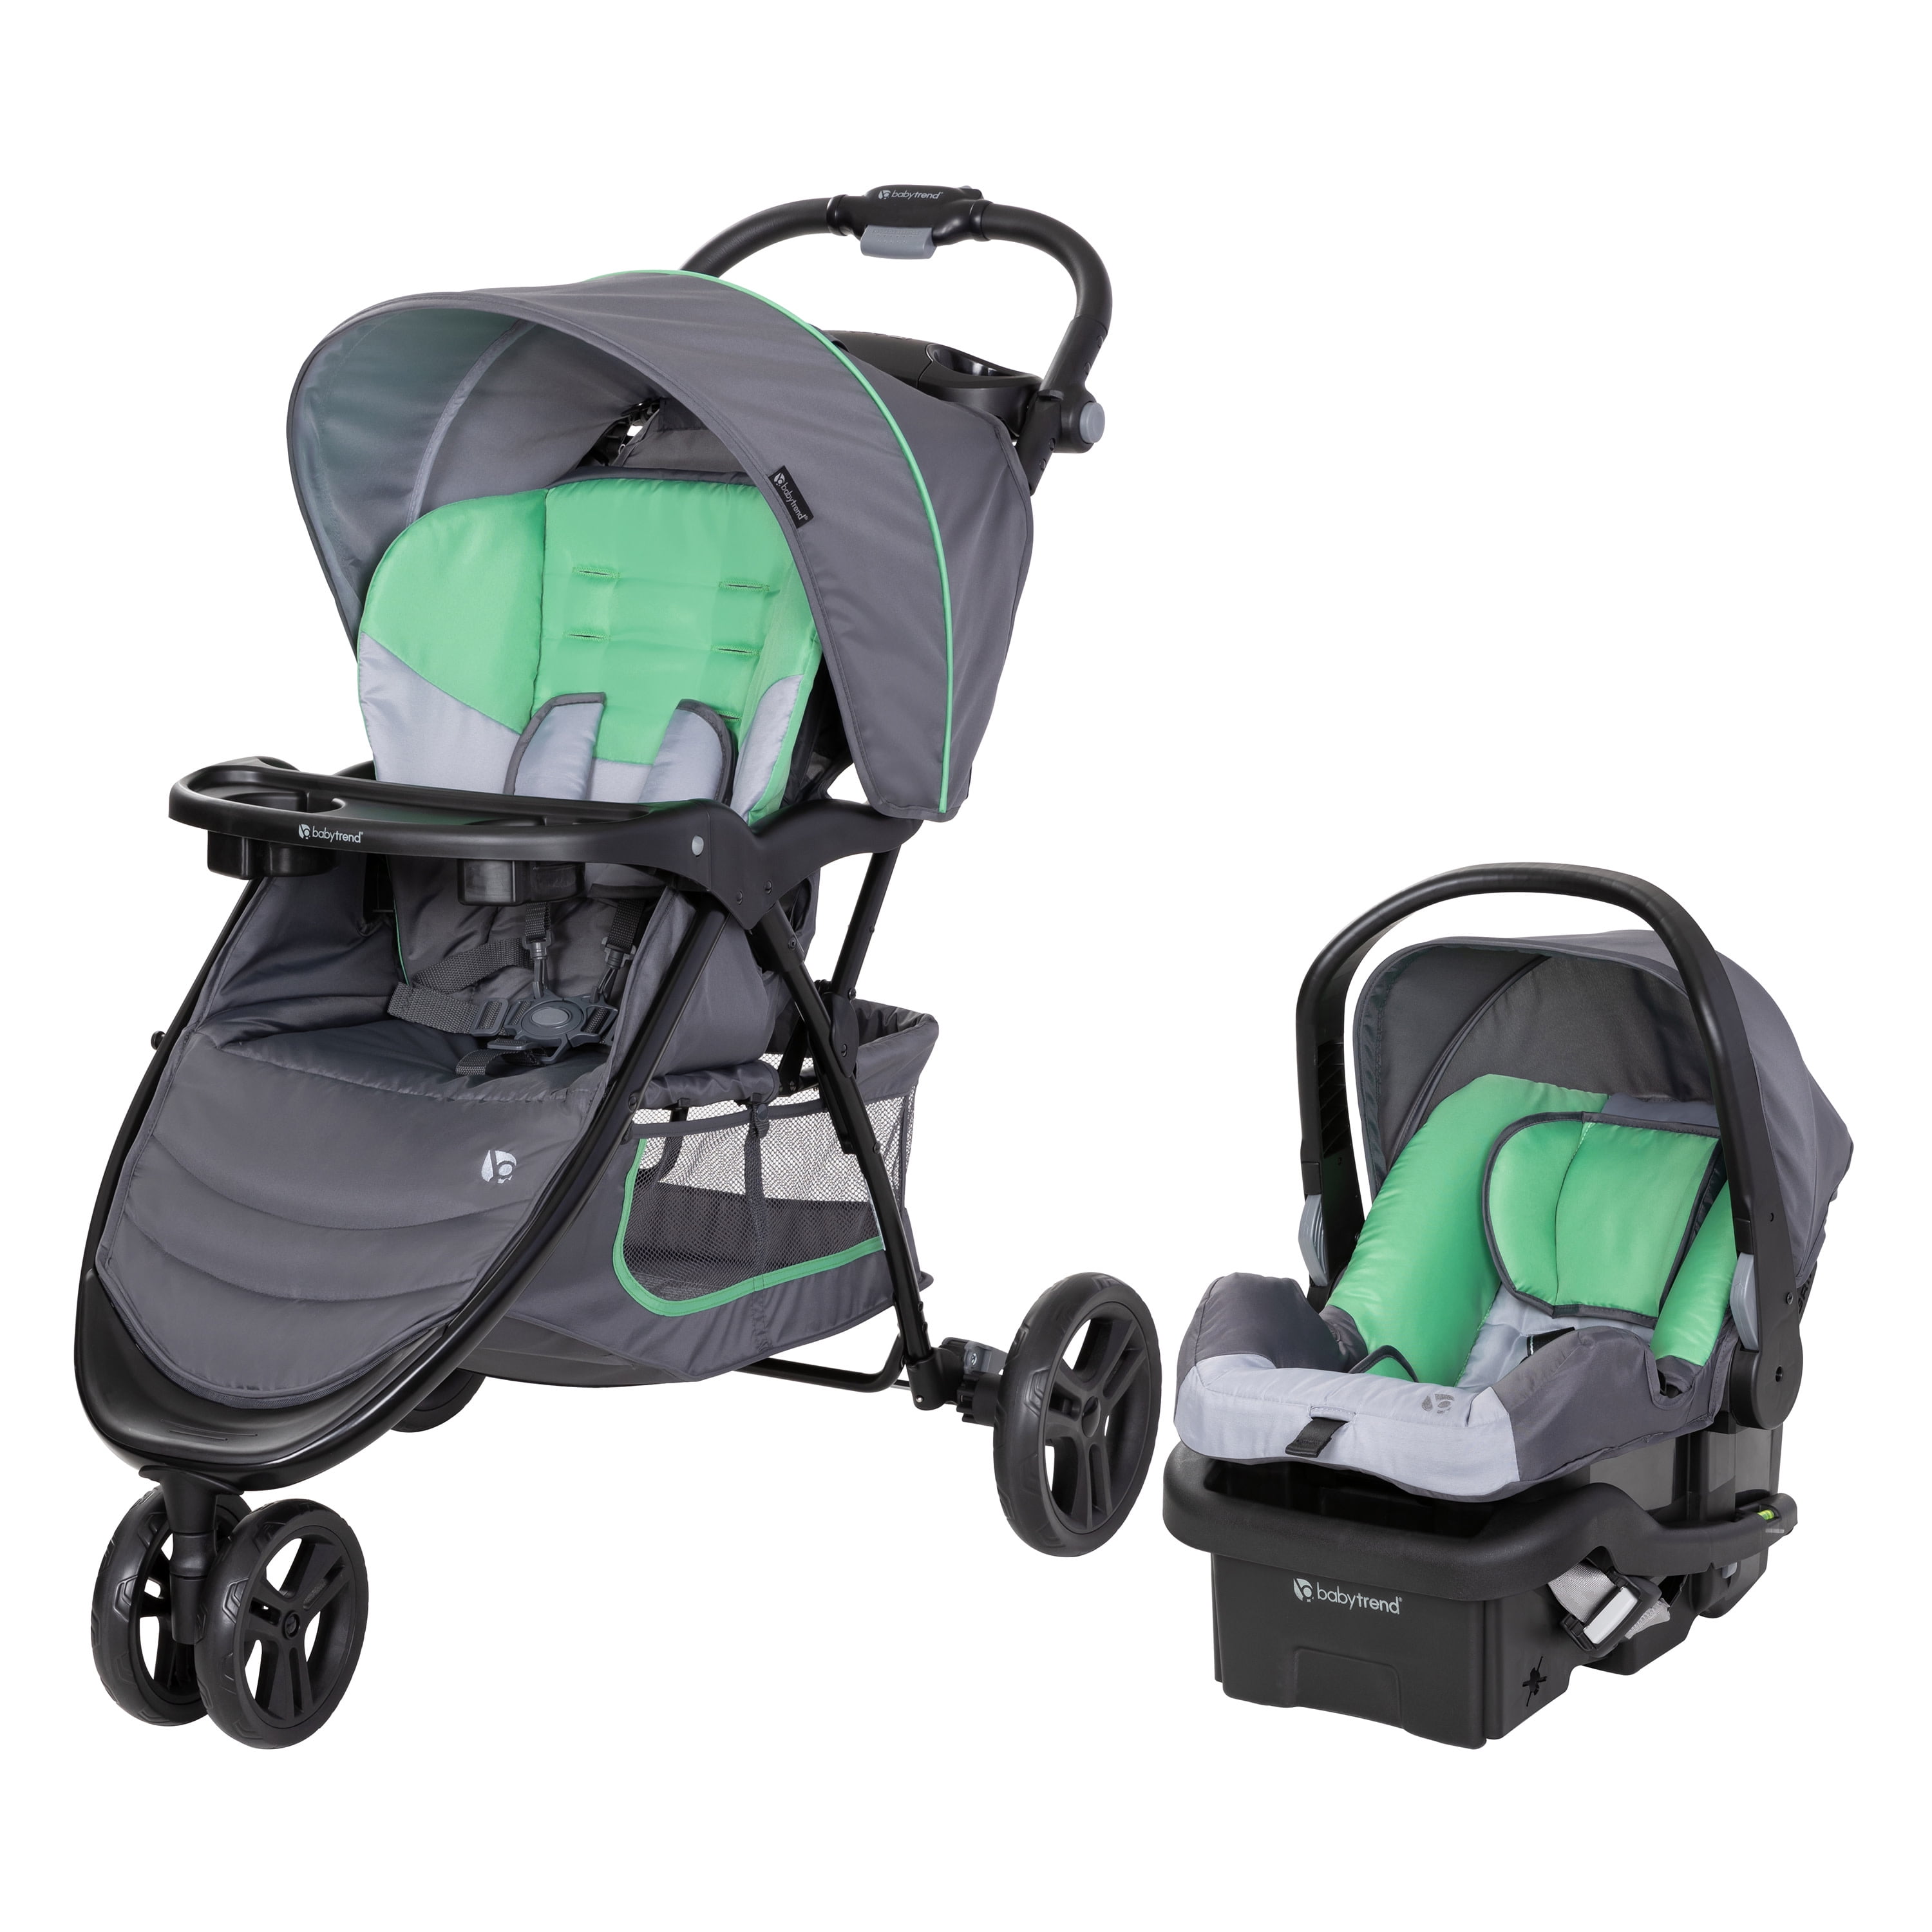 LegroLux 3 in 1 Buggy Pushchair Stroller Pram baby Newborn toddler Travel System 